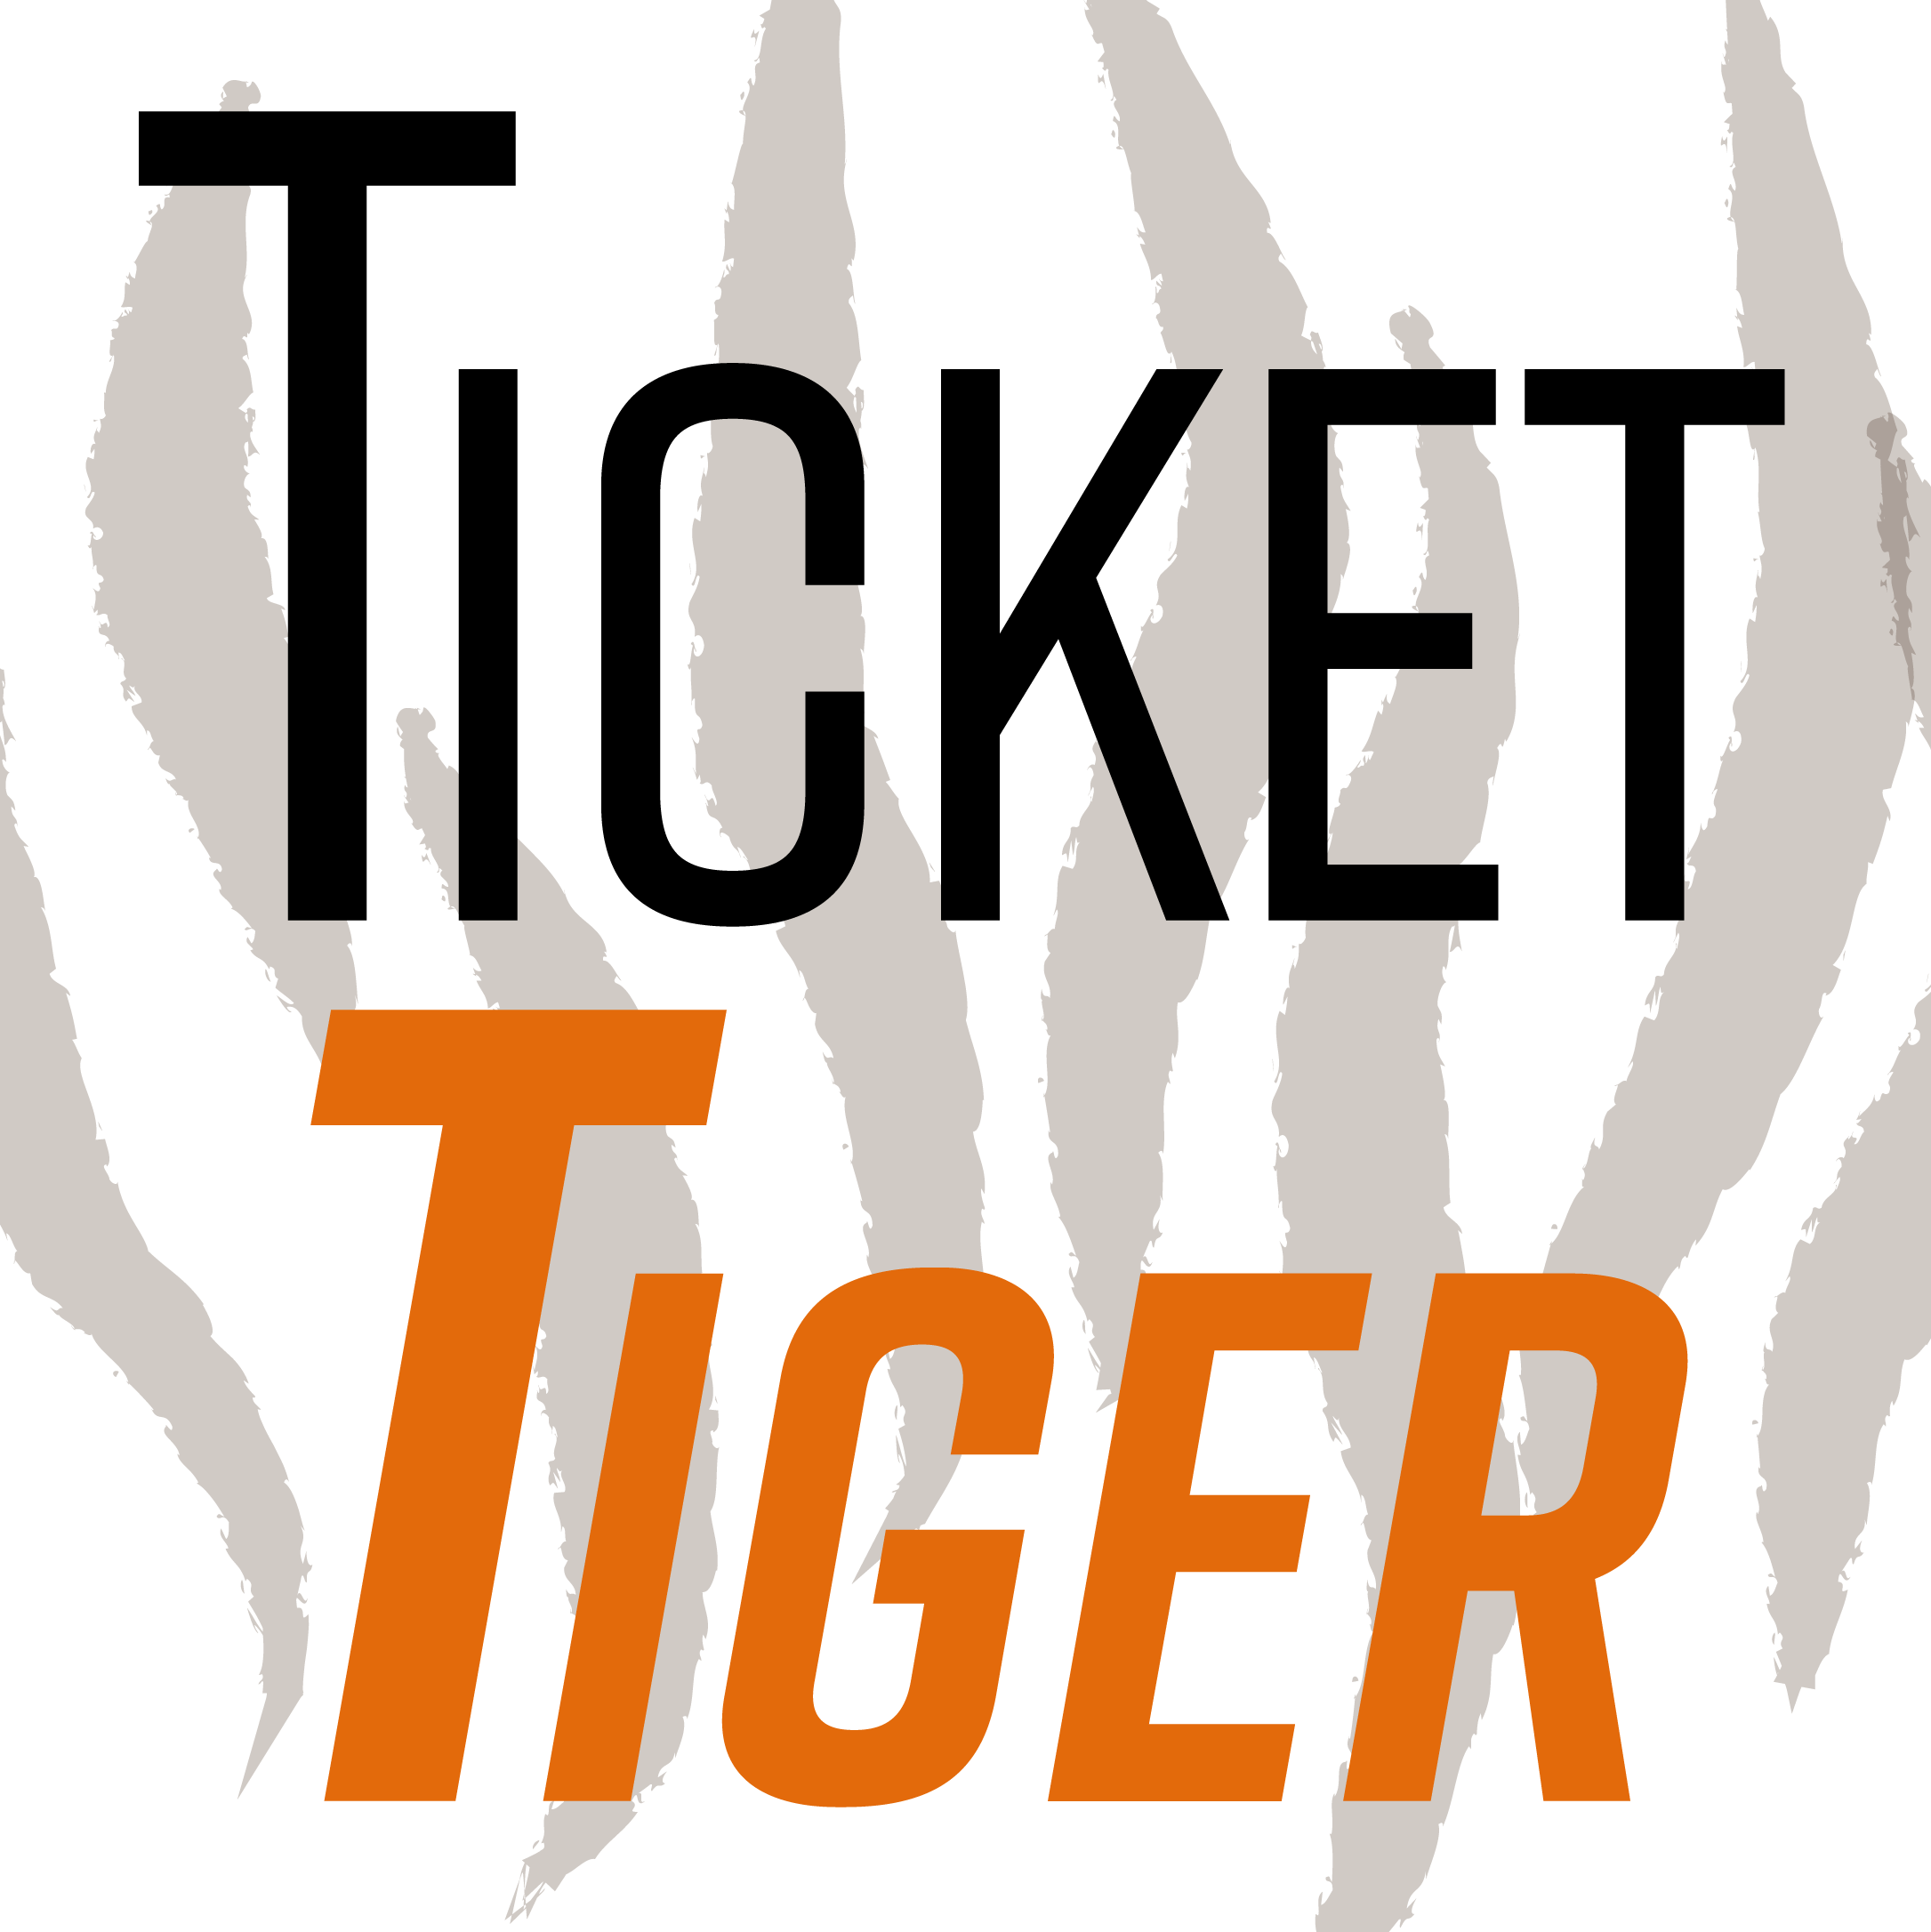 TicketTiger logo